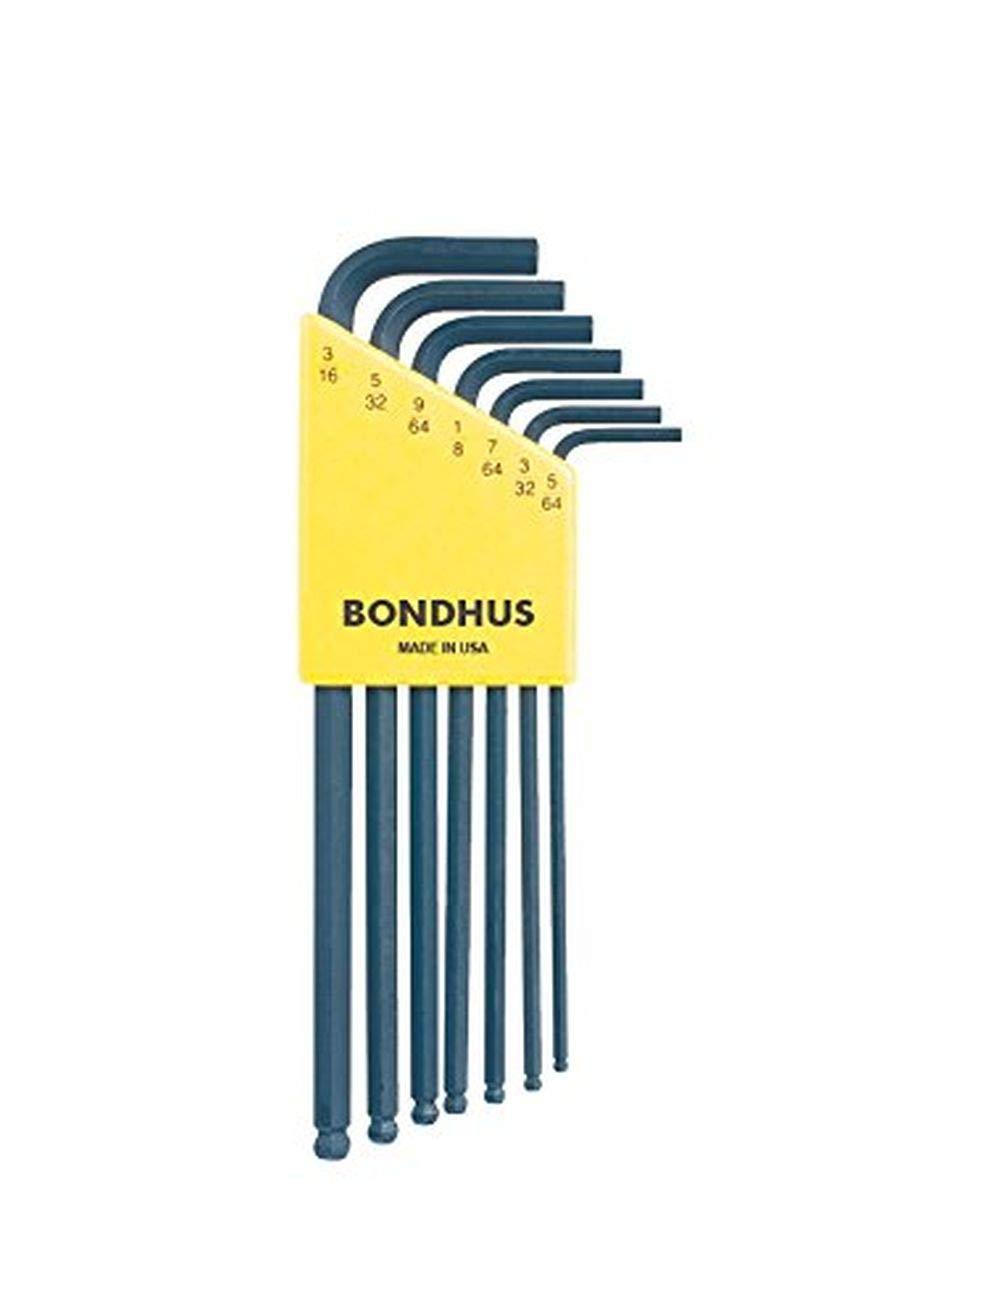  [AUSTRALIA] - Bondhus 10945 Set of 7 Balldriver L-wrenches, sizes 5/64-3/16"